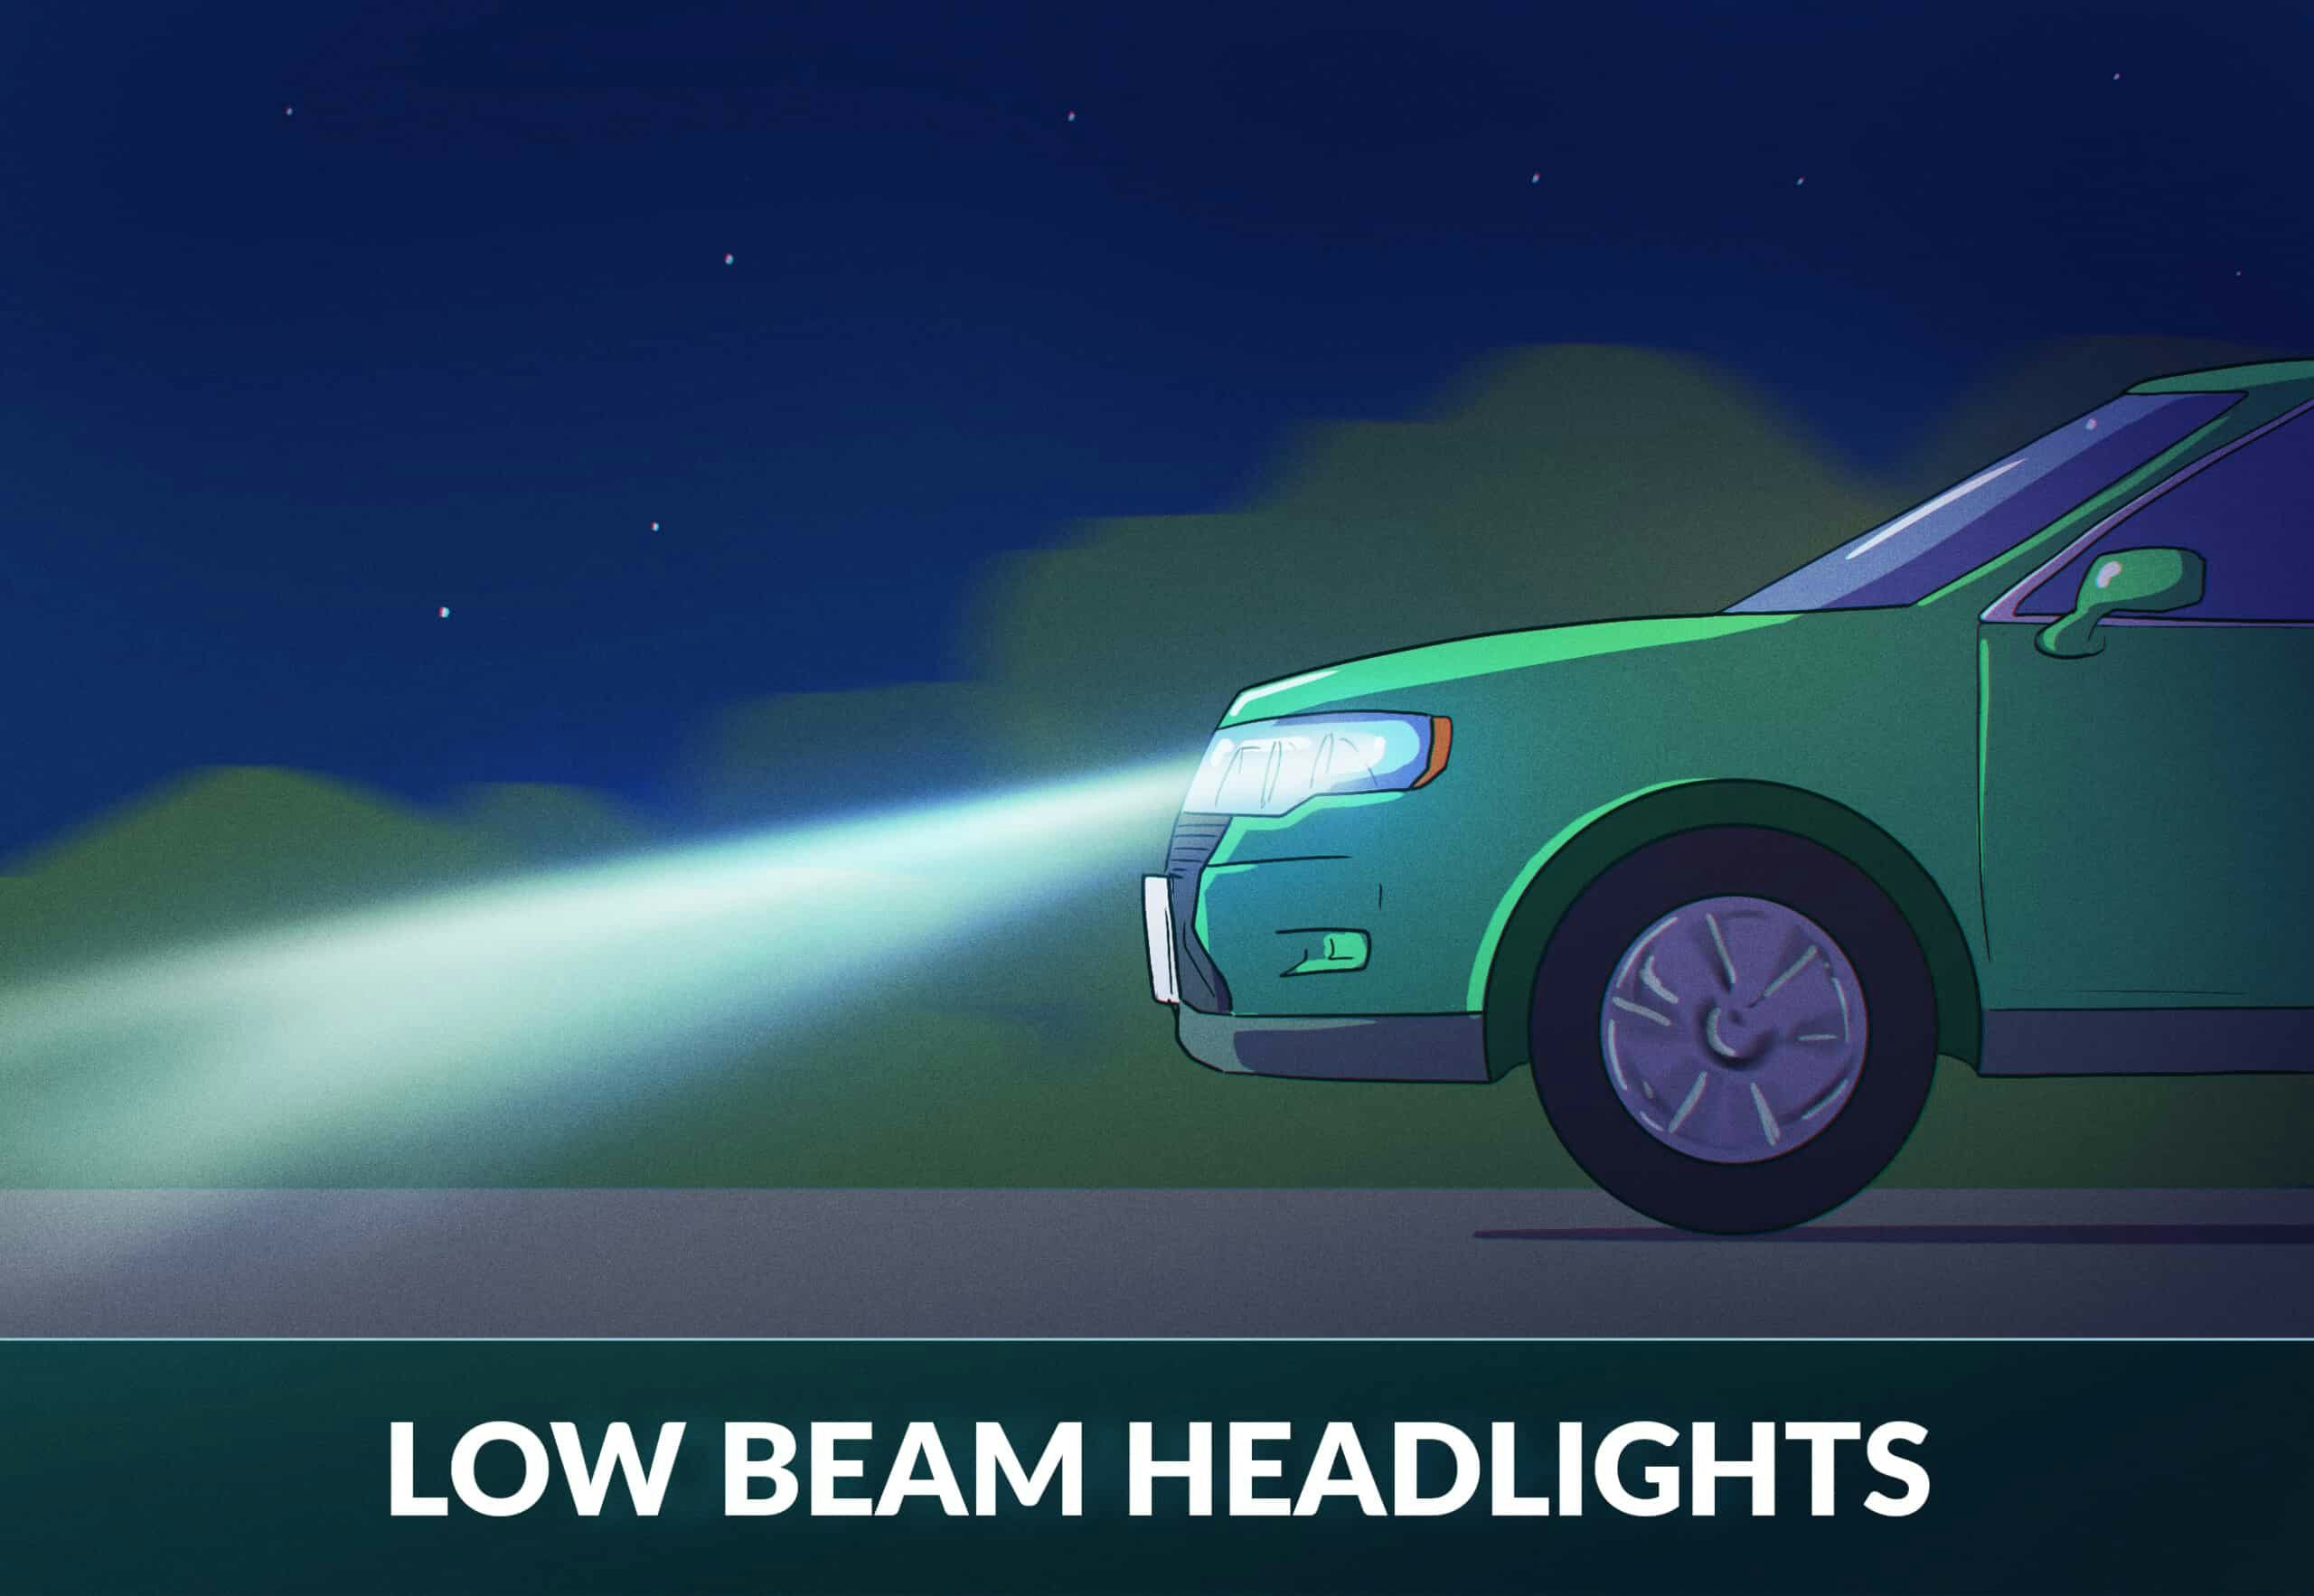 Low beam headlights